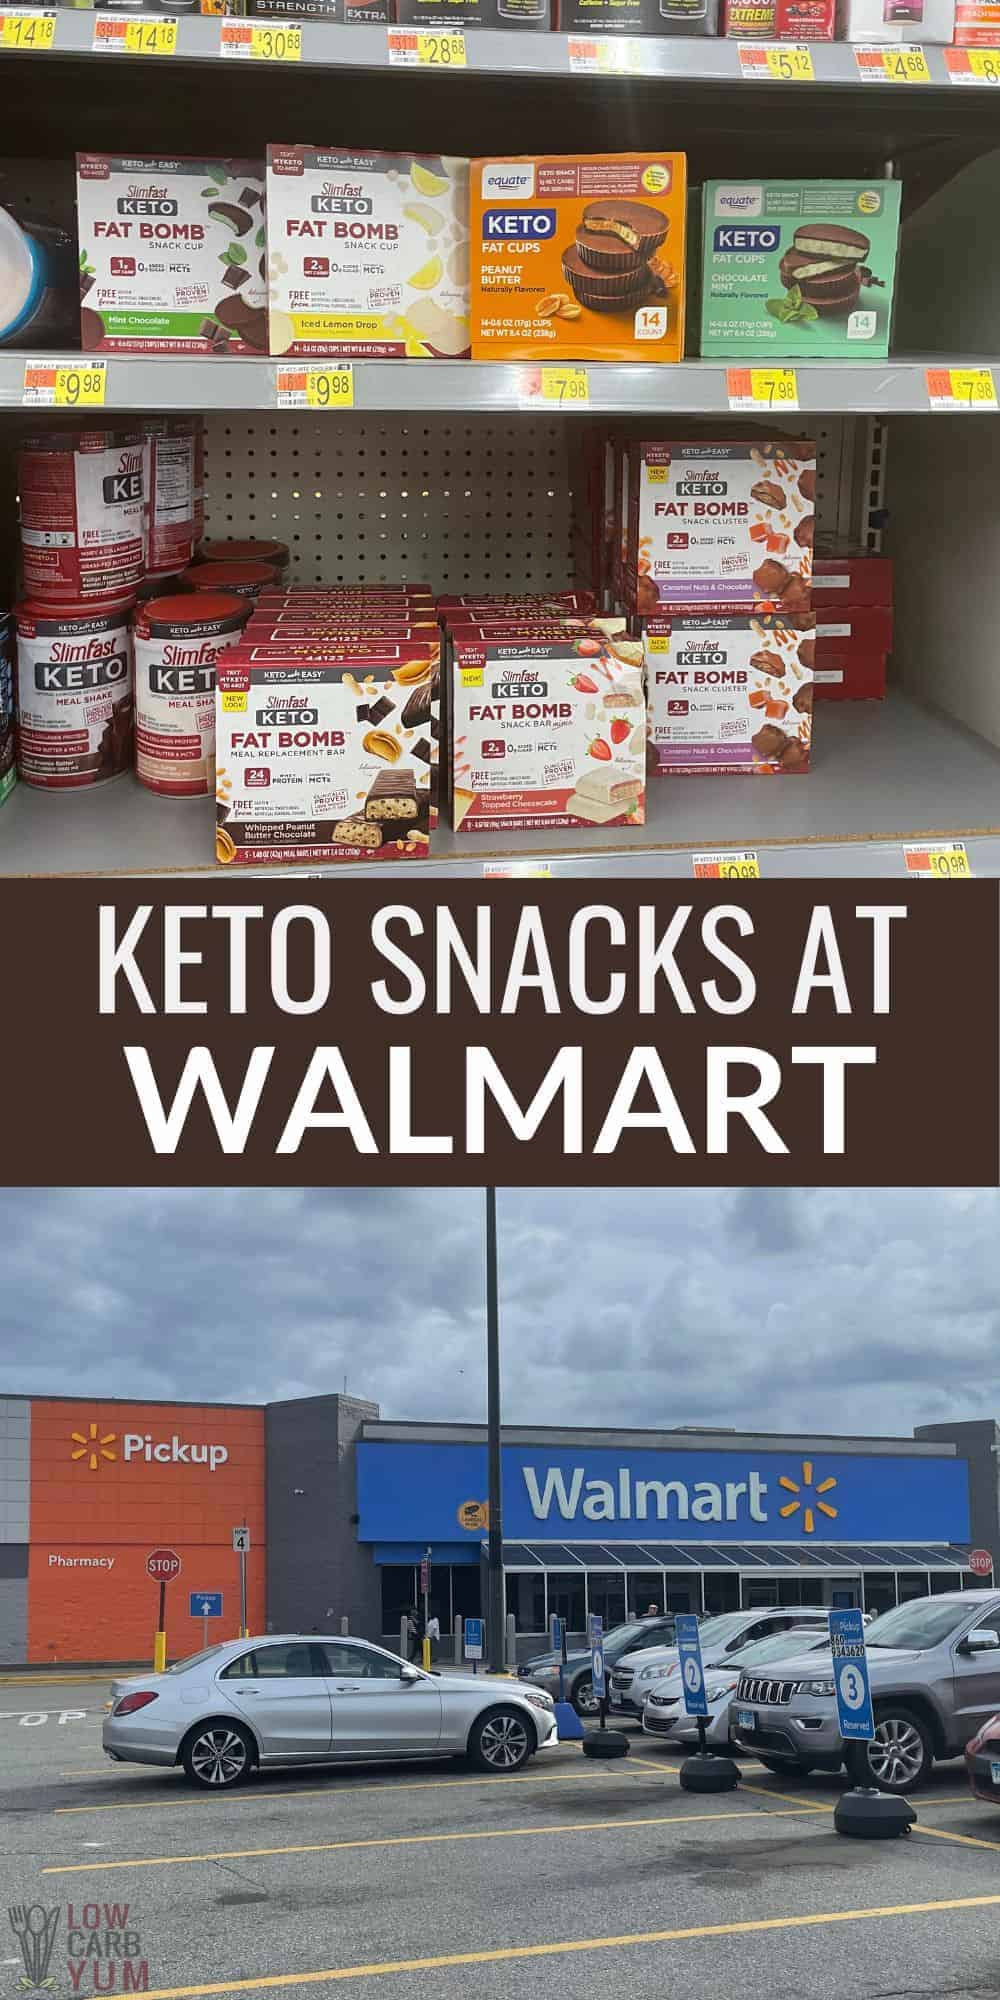 Keto-Snacks bei Walmart Pinterest Bild.